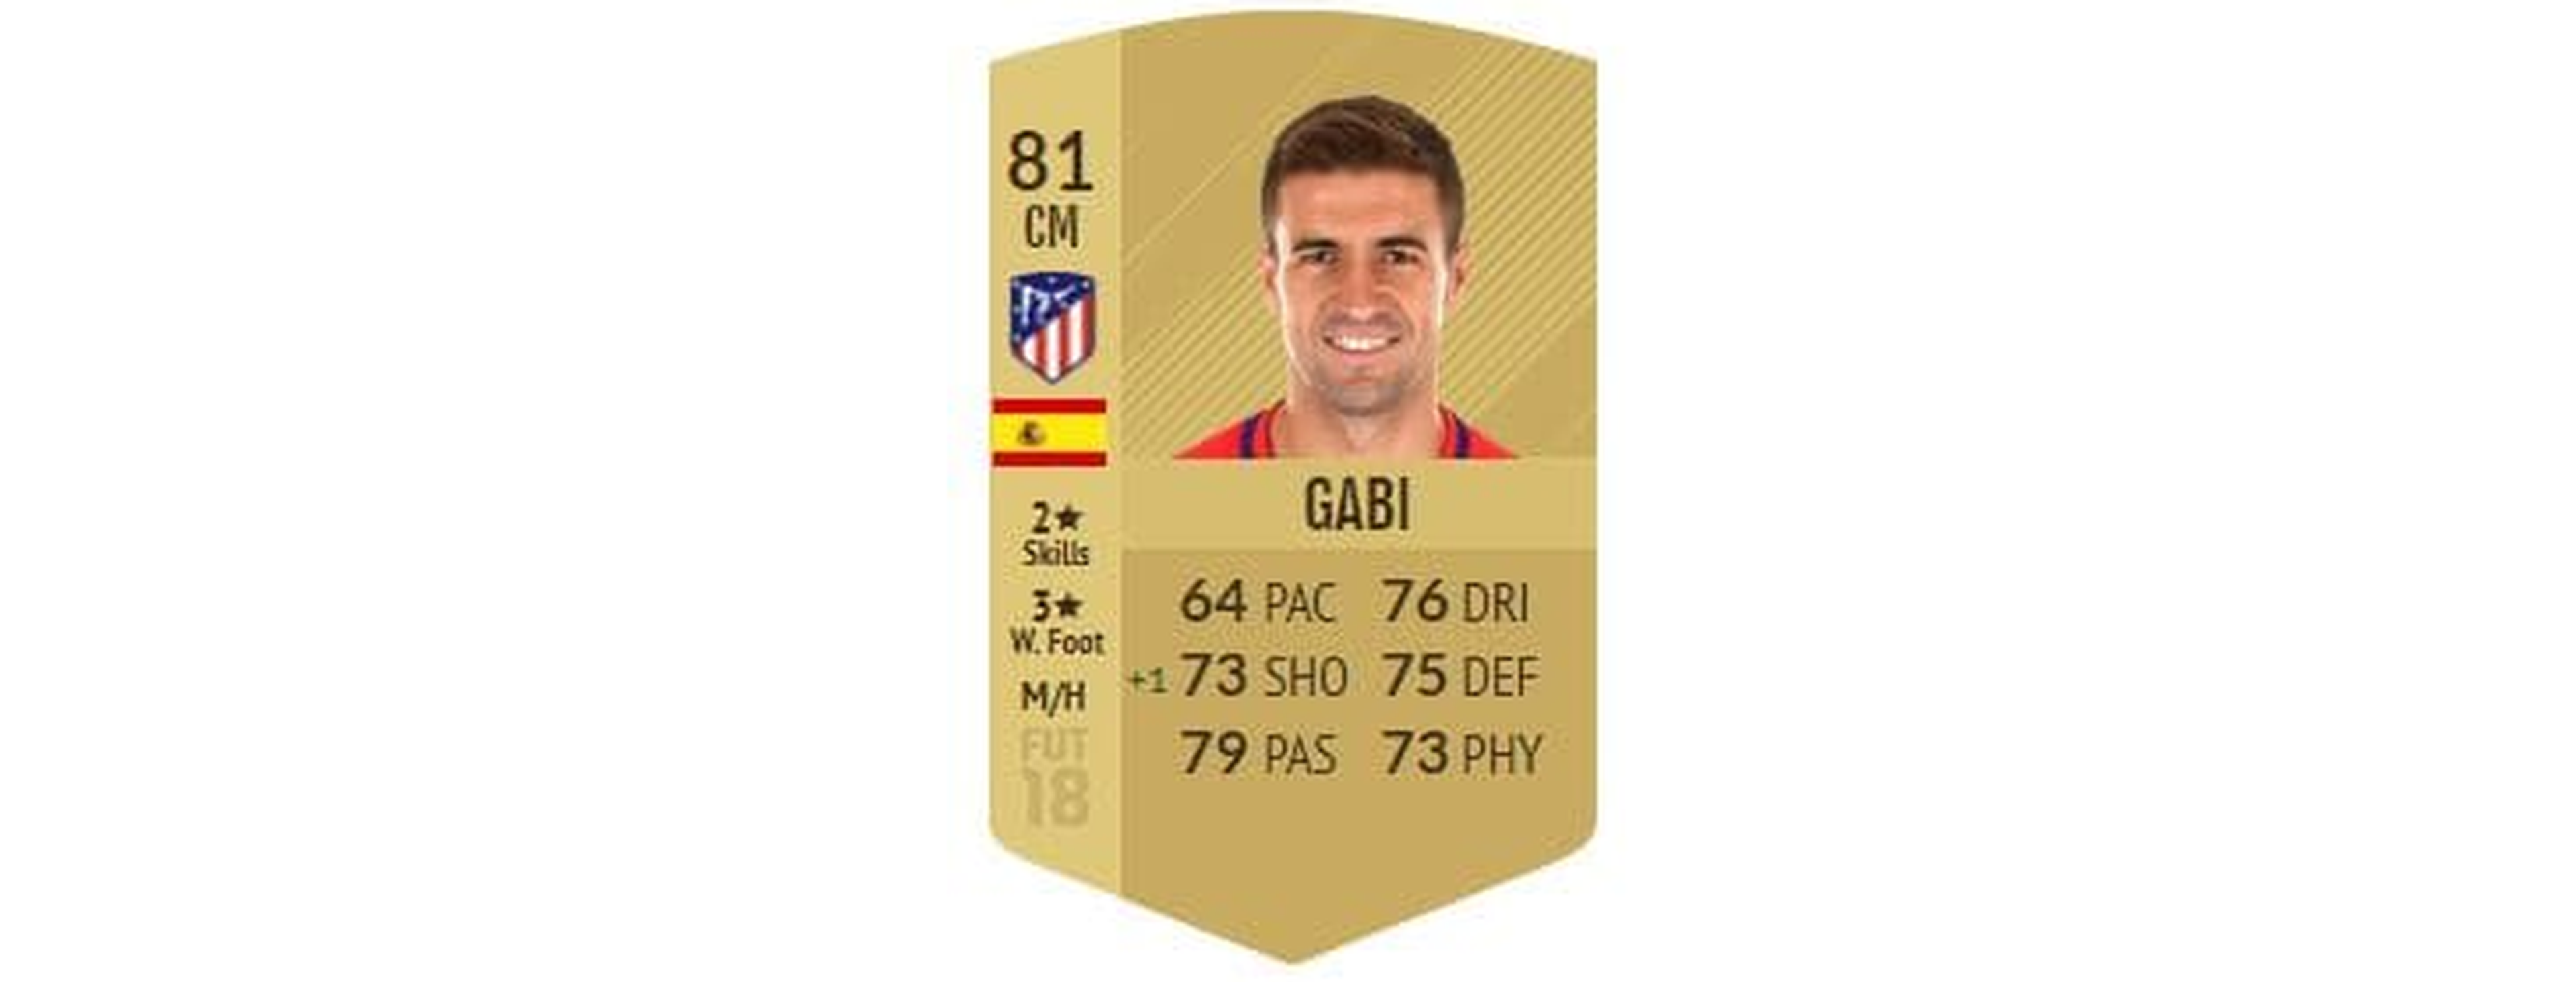 FIFA 18 - Gabi